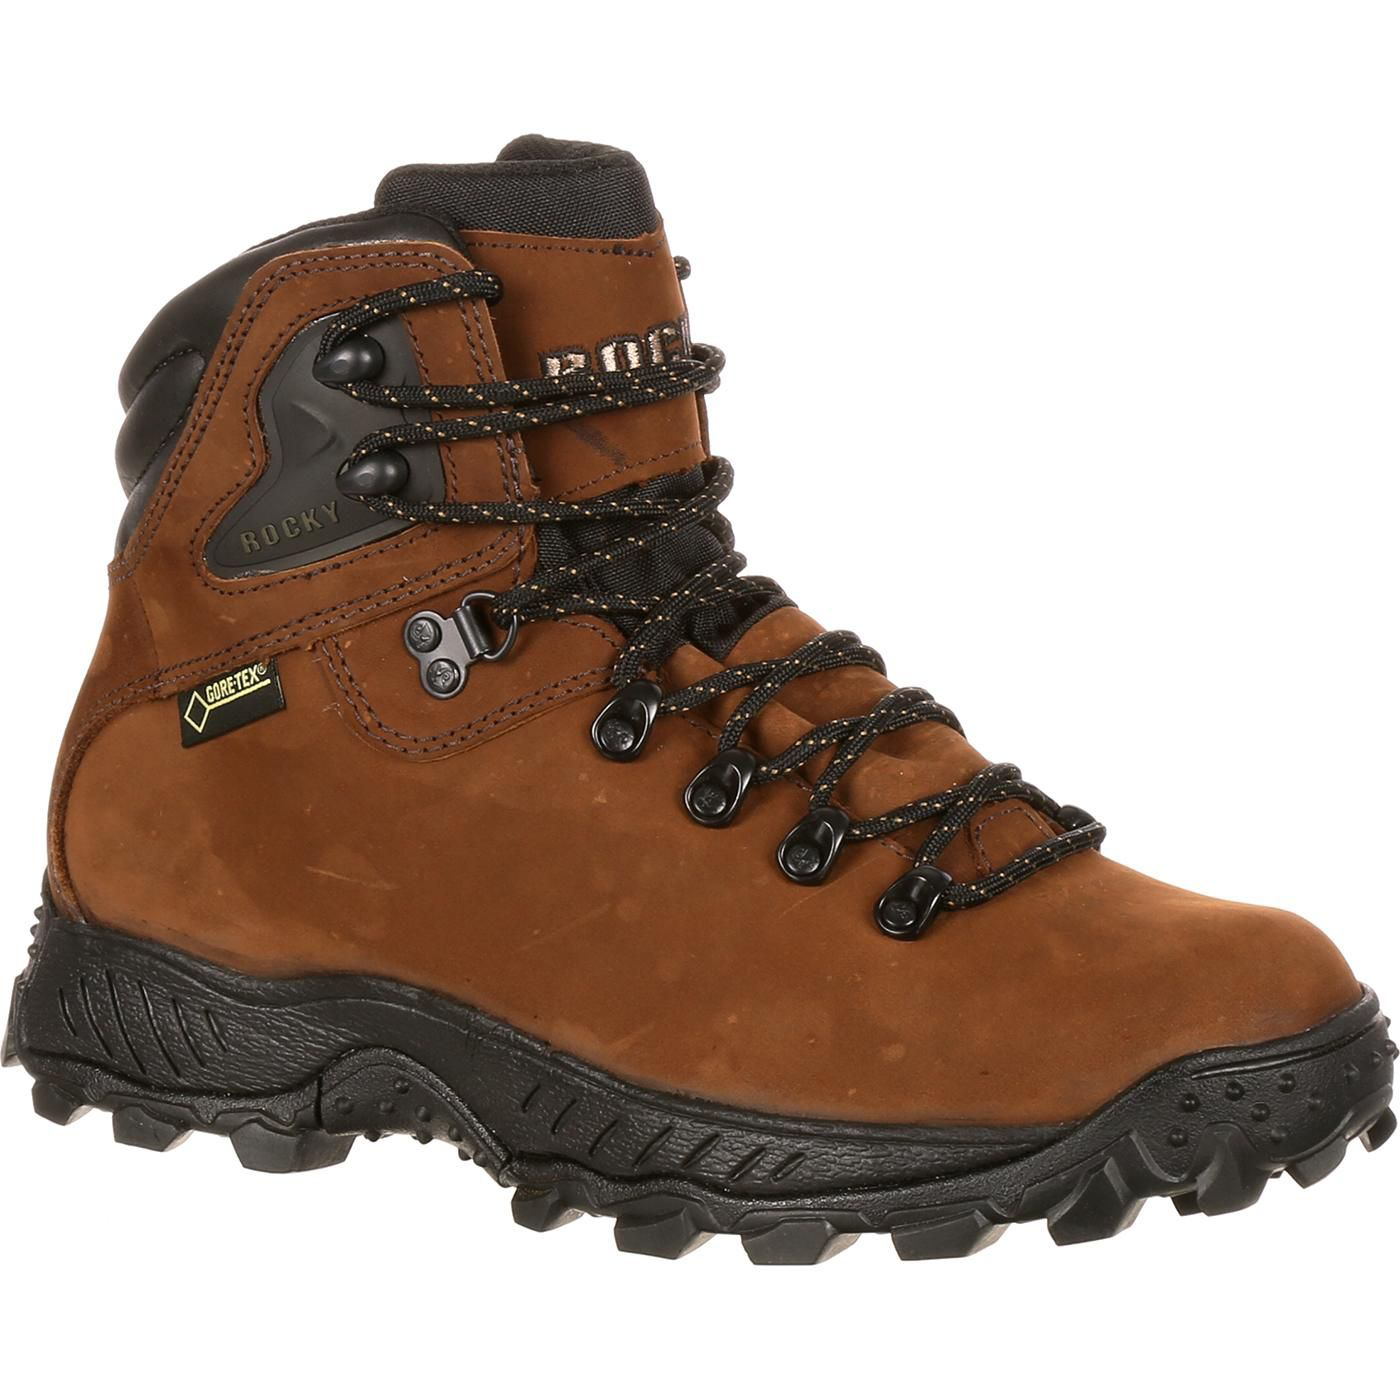 Rocky Ridgetop GORE-TEX 6"" Hiking Boots for Men - Brown - 9.5W